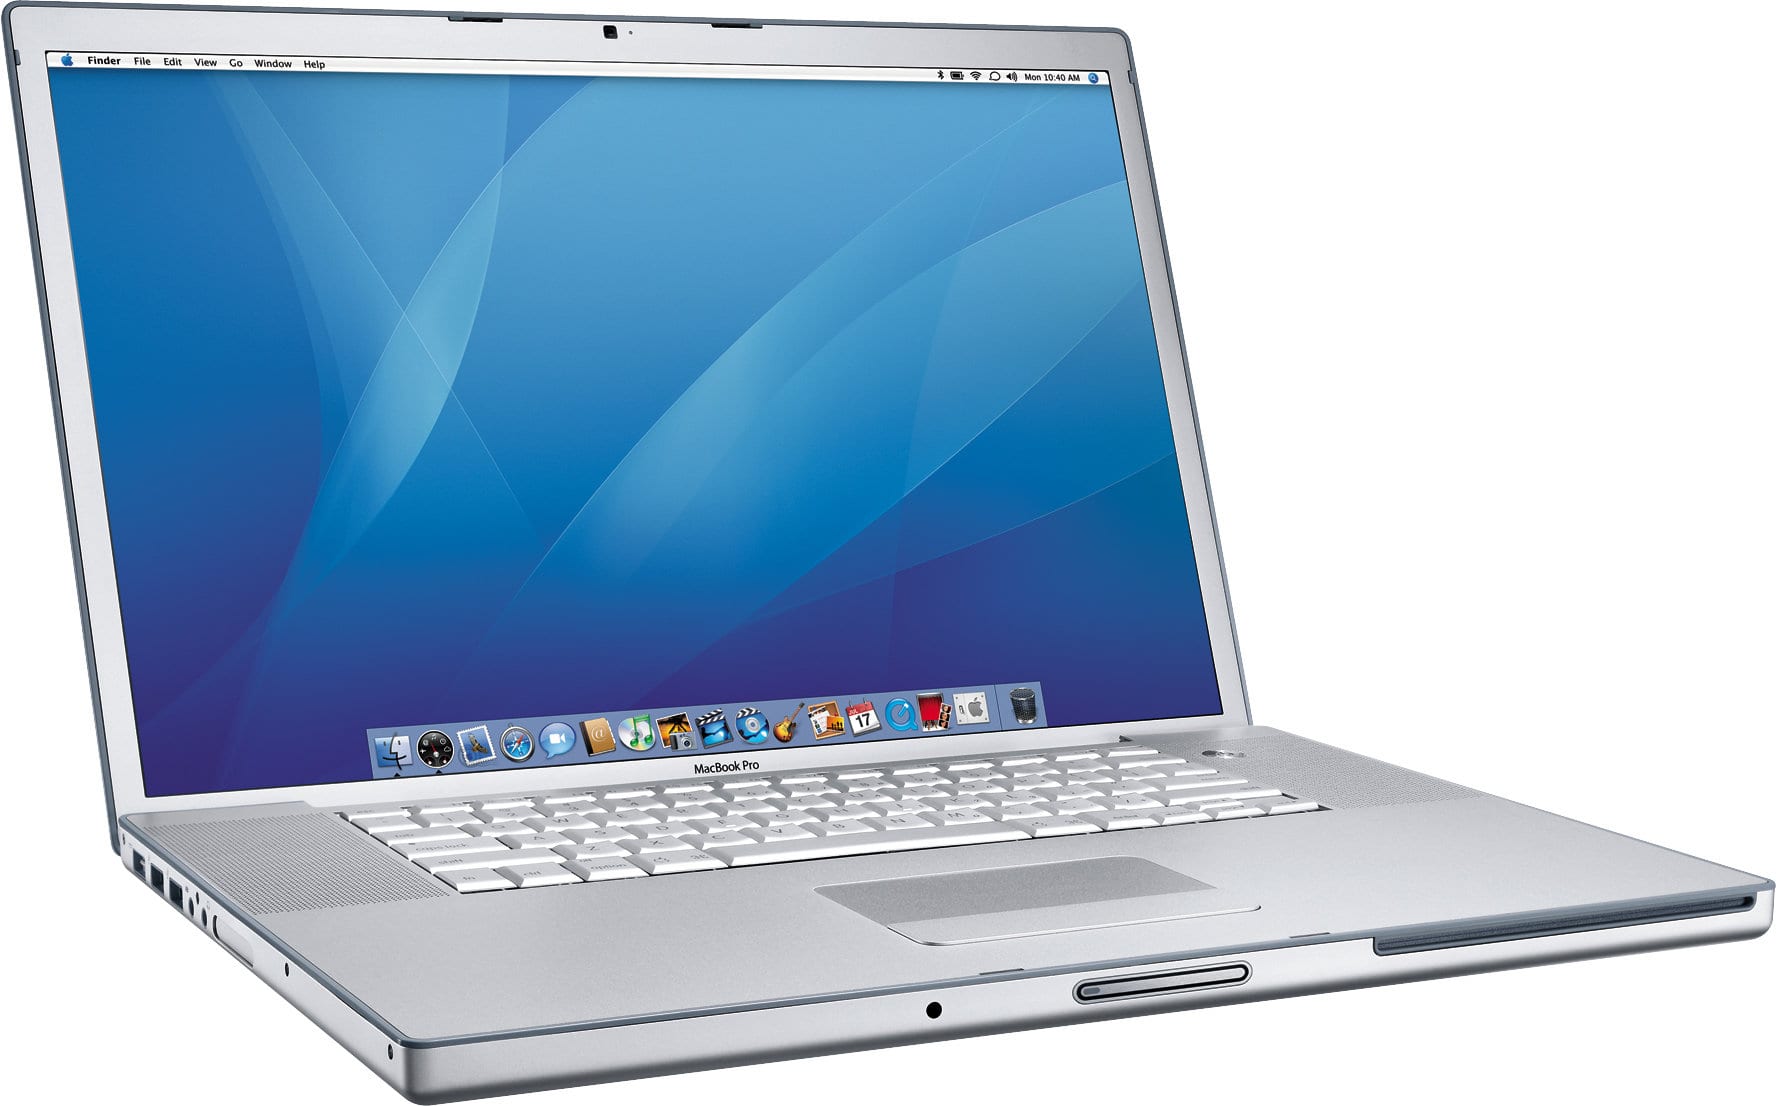 quickbooks pro for mac laptop